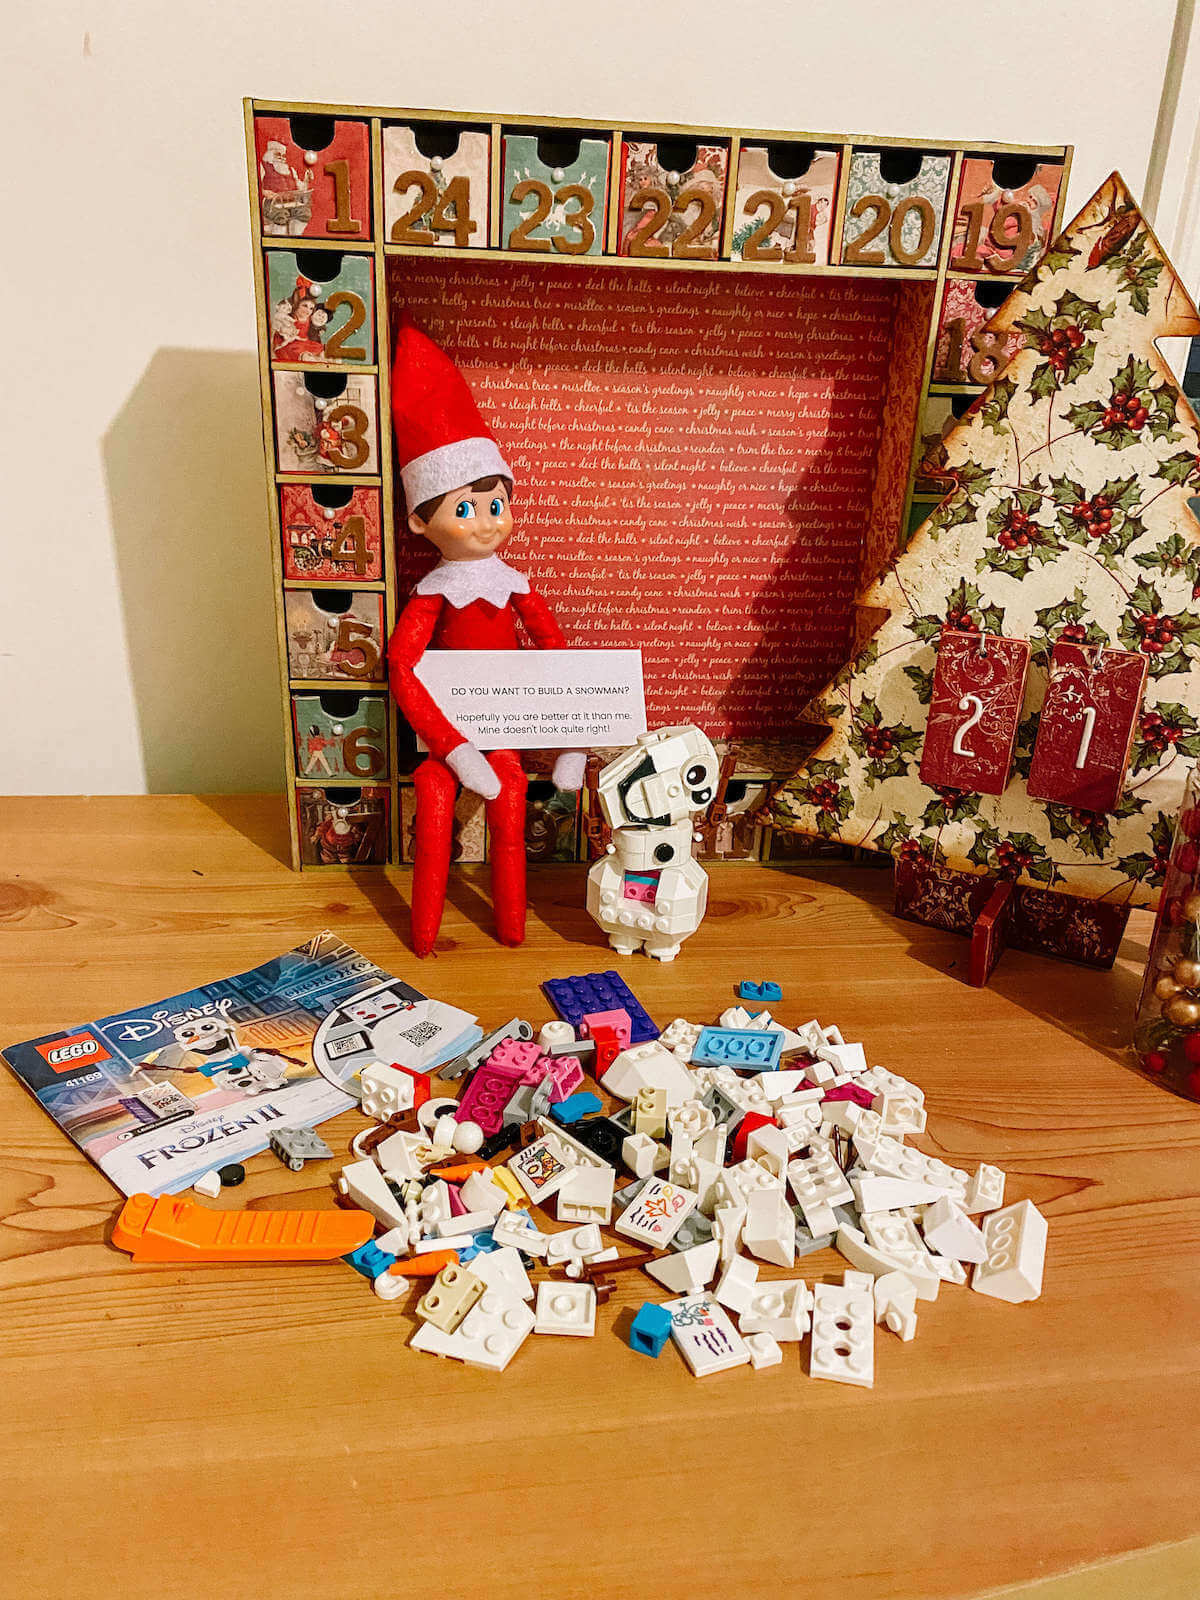 Elf on the shelf do you want to build a snowman olaf lego